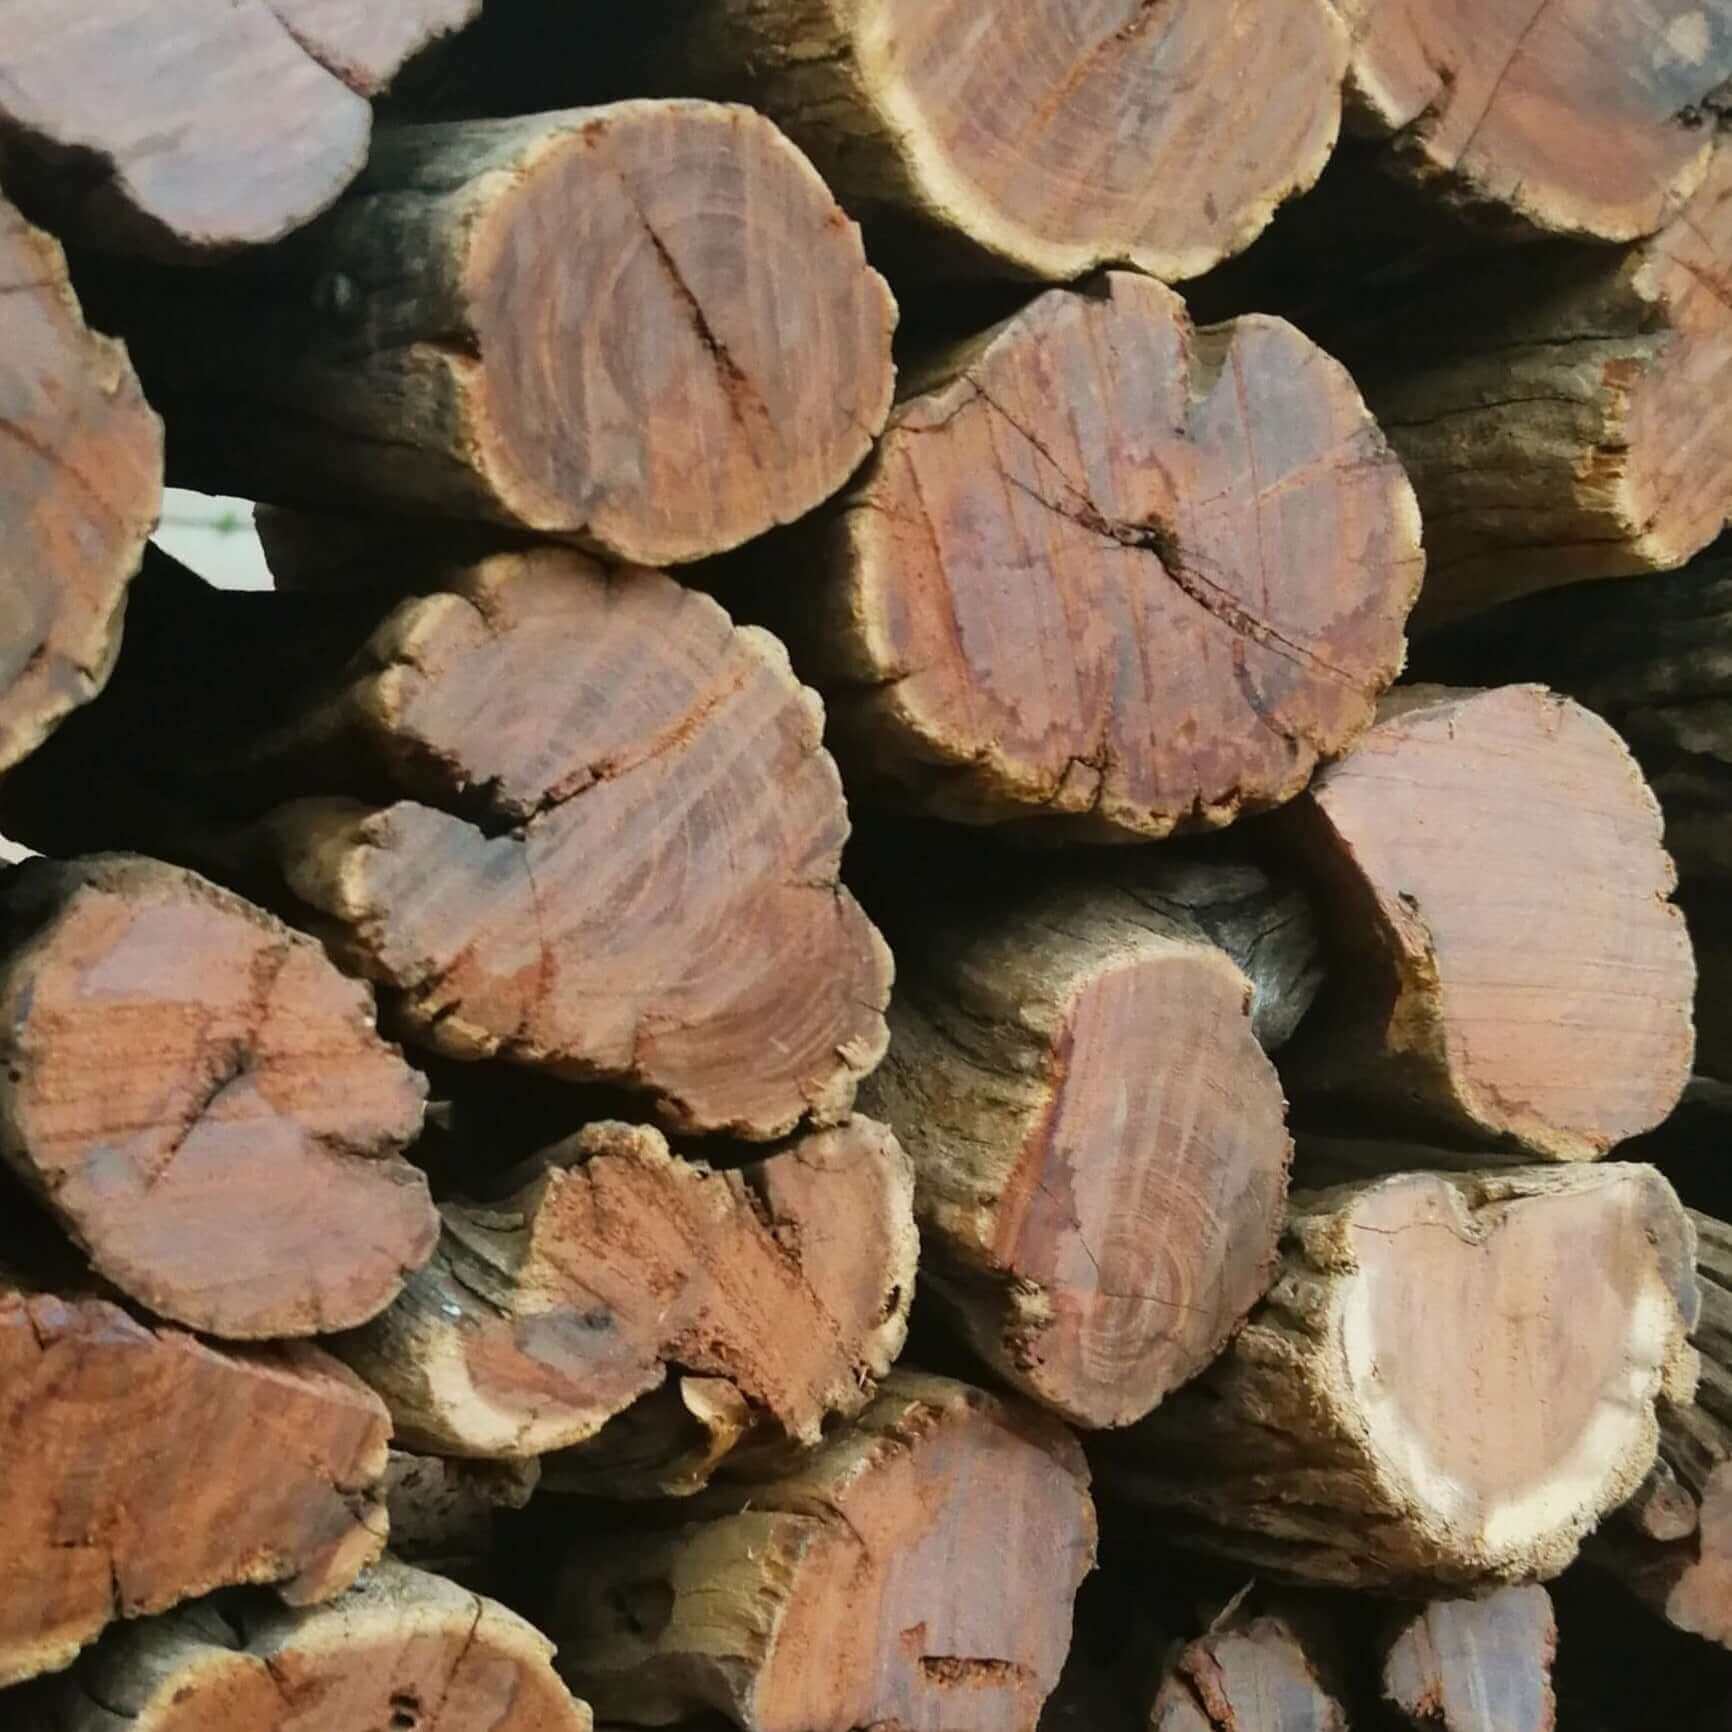 Sekelbos Namibian Hardwood 500KG Bulk (Sicklebush)  Half Ton - Cape Town Firewood